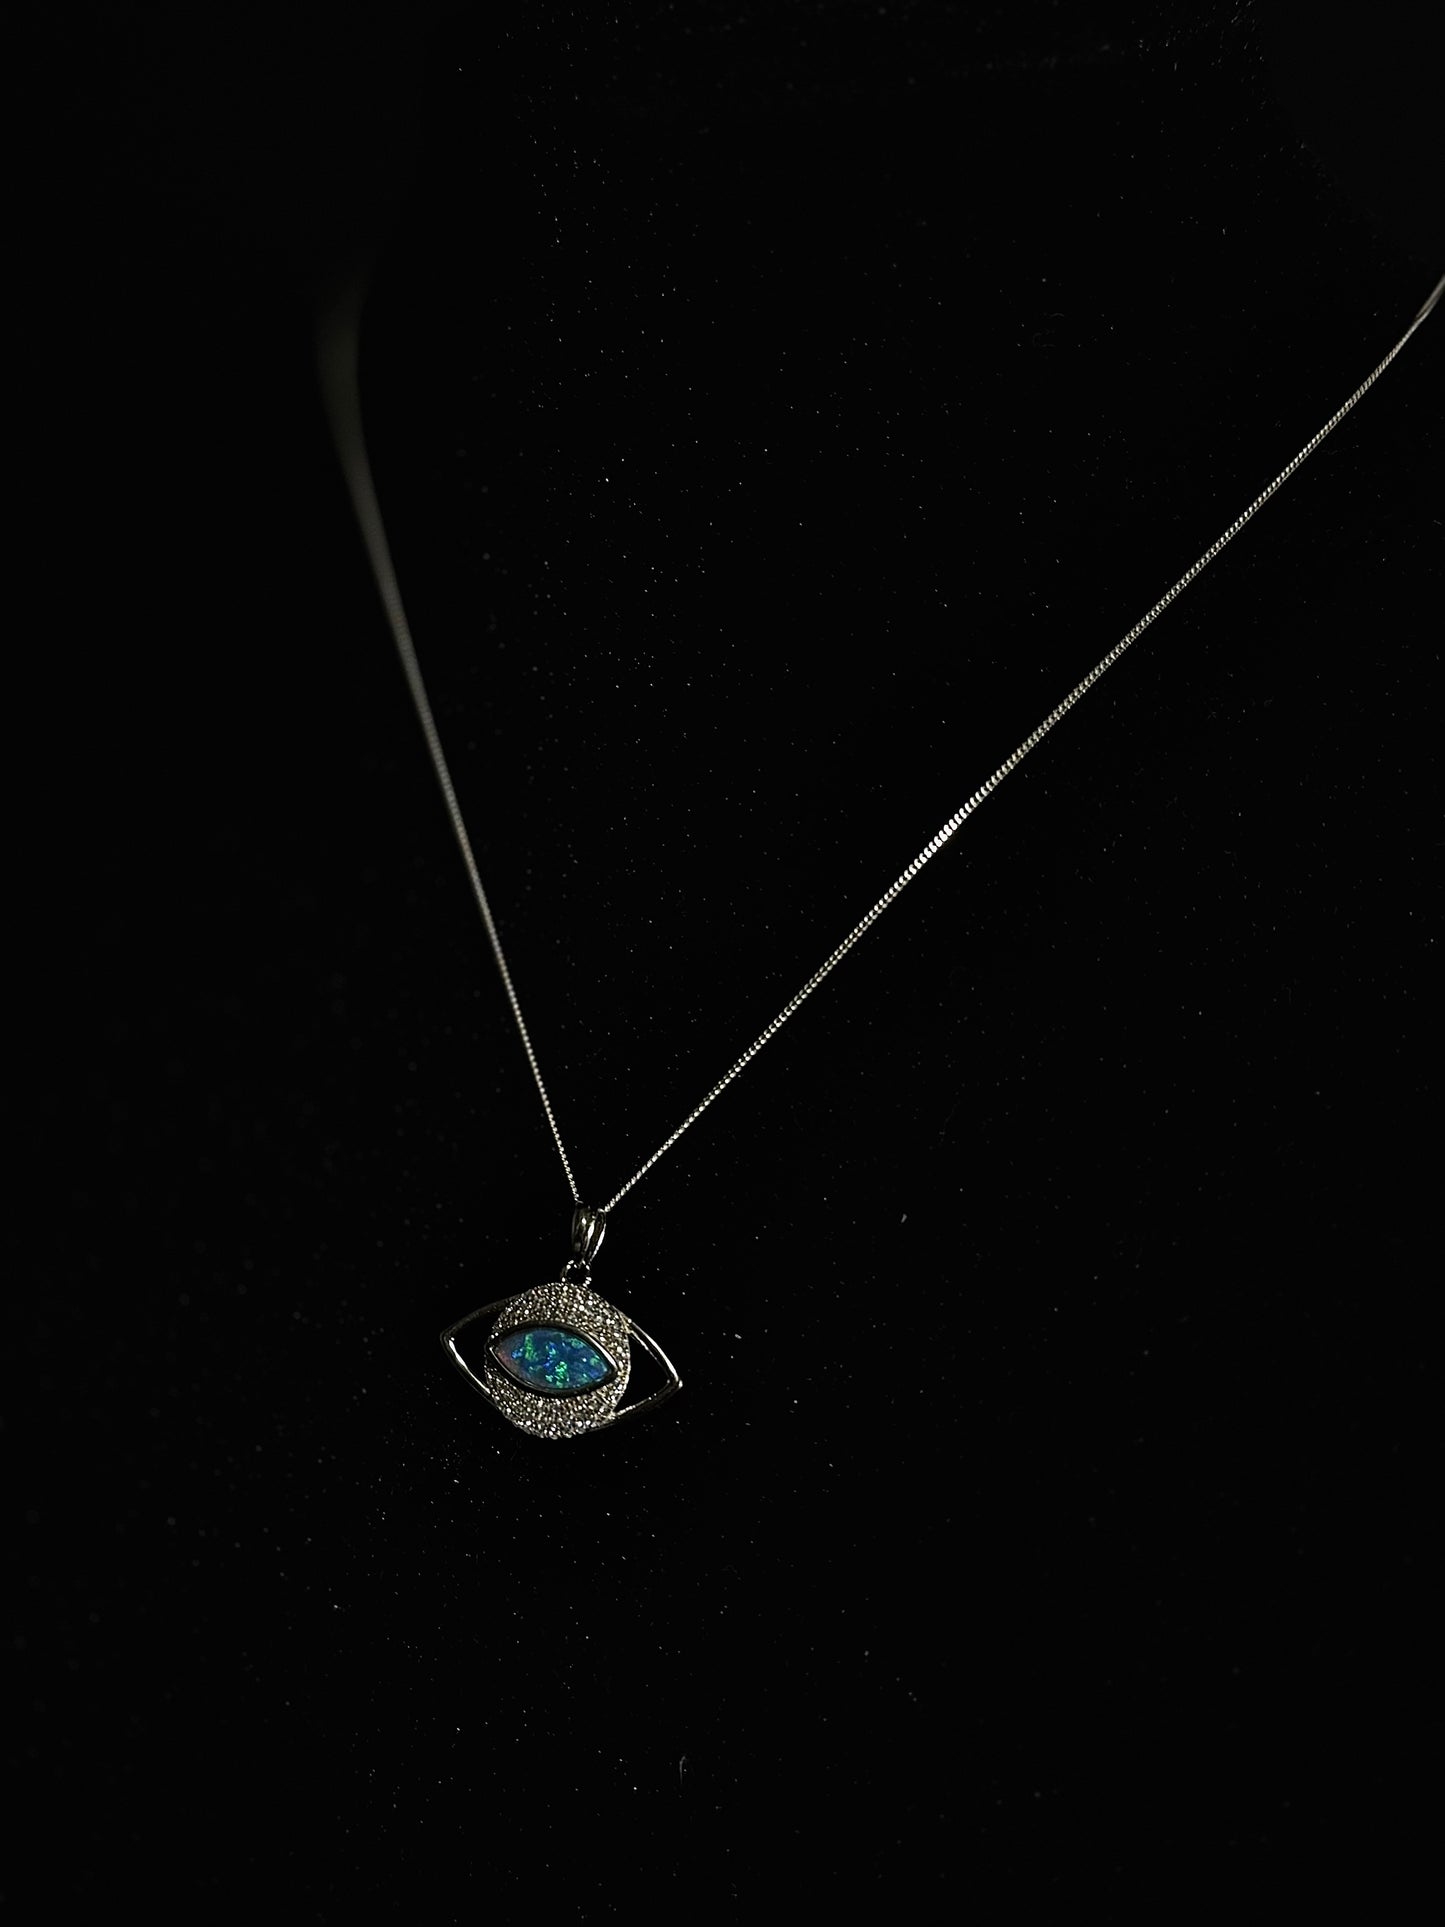 Opal Evil Eye Pendant